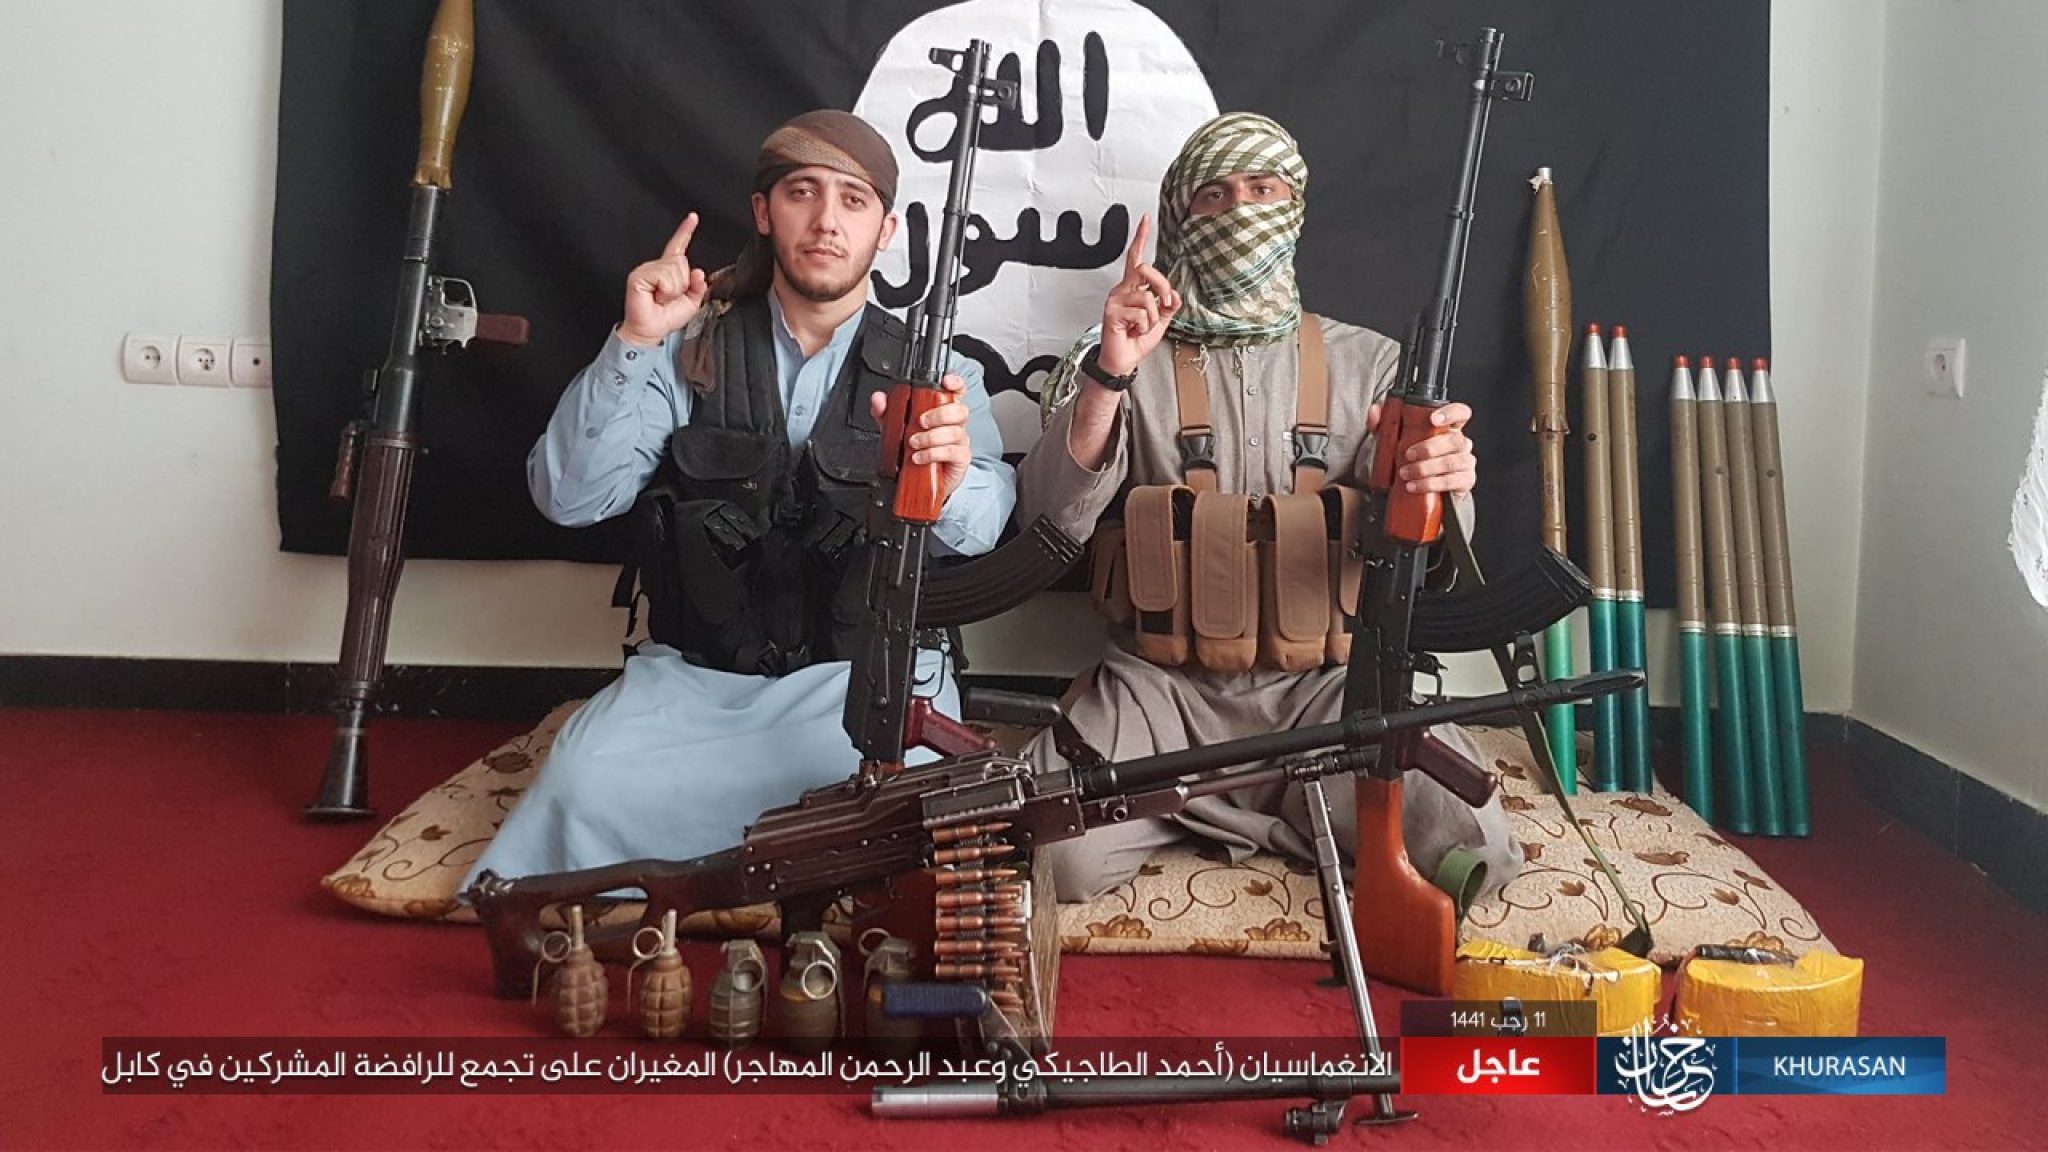 Террористы крокуса на фоне флага. Афганистан террористы Талибан. Афганистан Талибан ИГИЛ. Исламское государство Афганистан. Талибан Афганистан оружие.